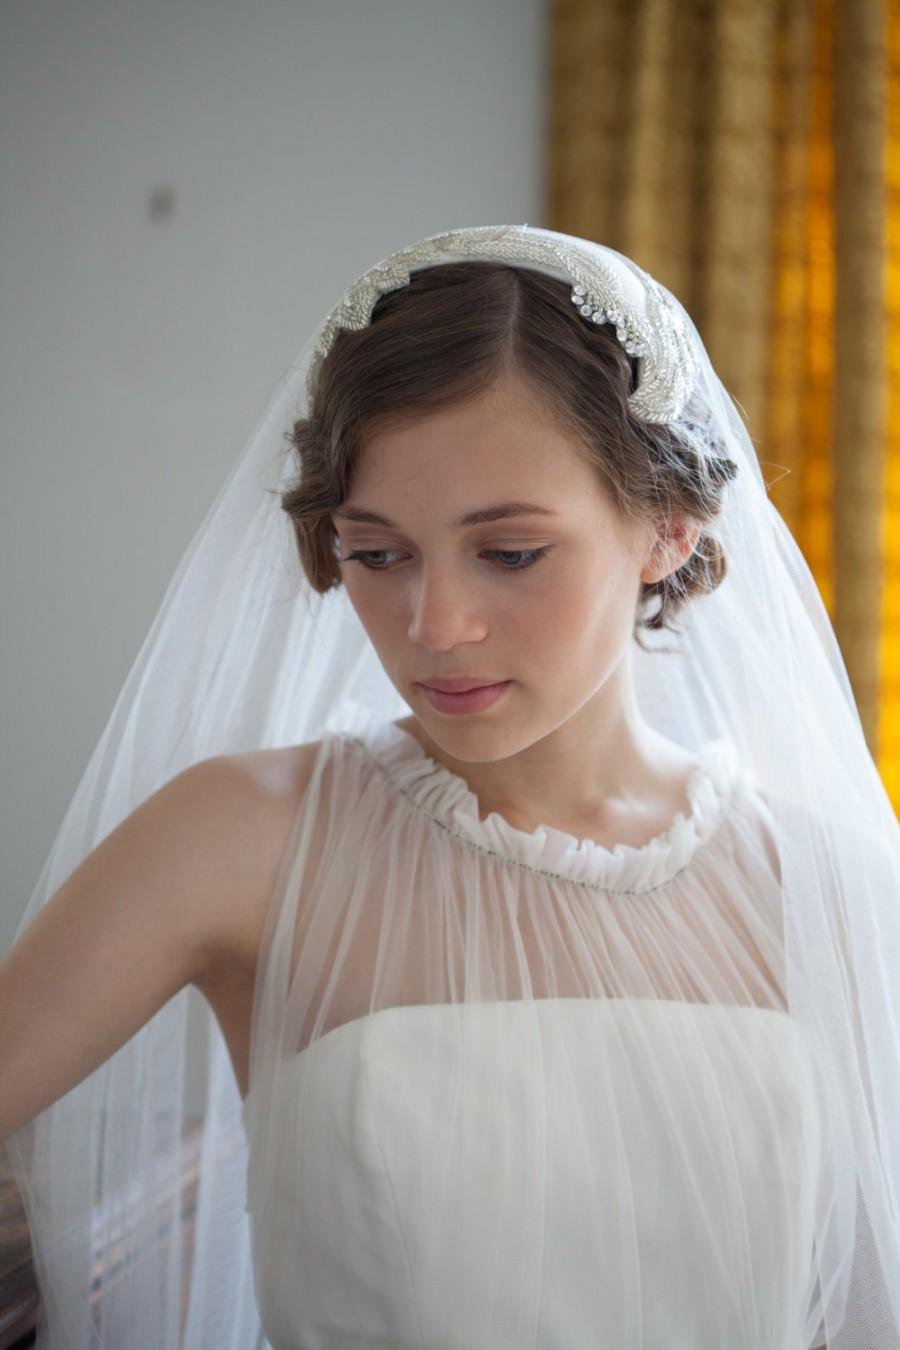 زفاف - Wedding Headpiece and veil - Vintage style Bridal headpiece and drop veil set -1940s Wedding Dress -1930s Wedding Dress -Fingertip length